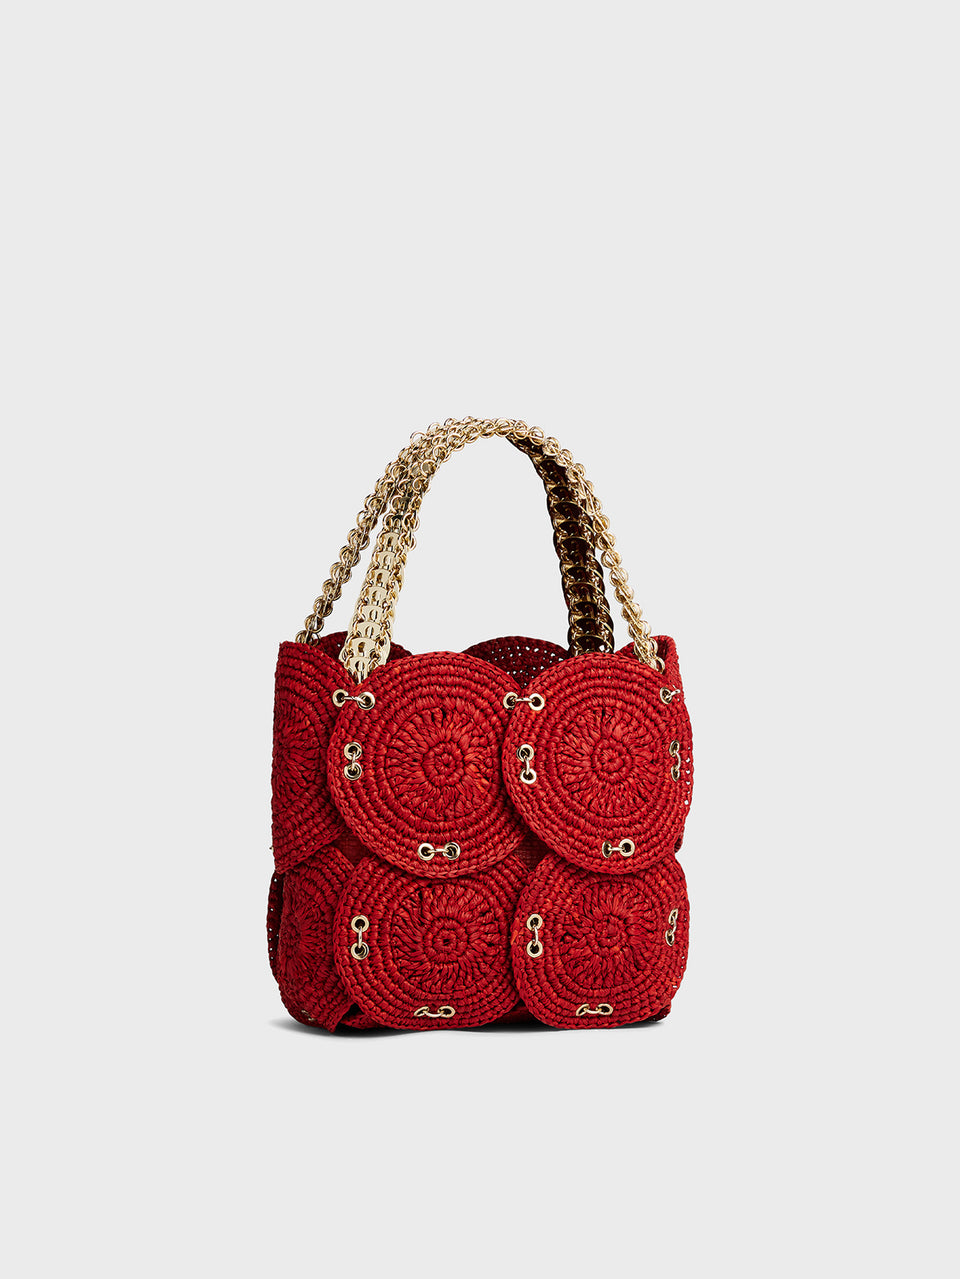 Small Handbag with Red discs in Raffia